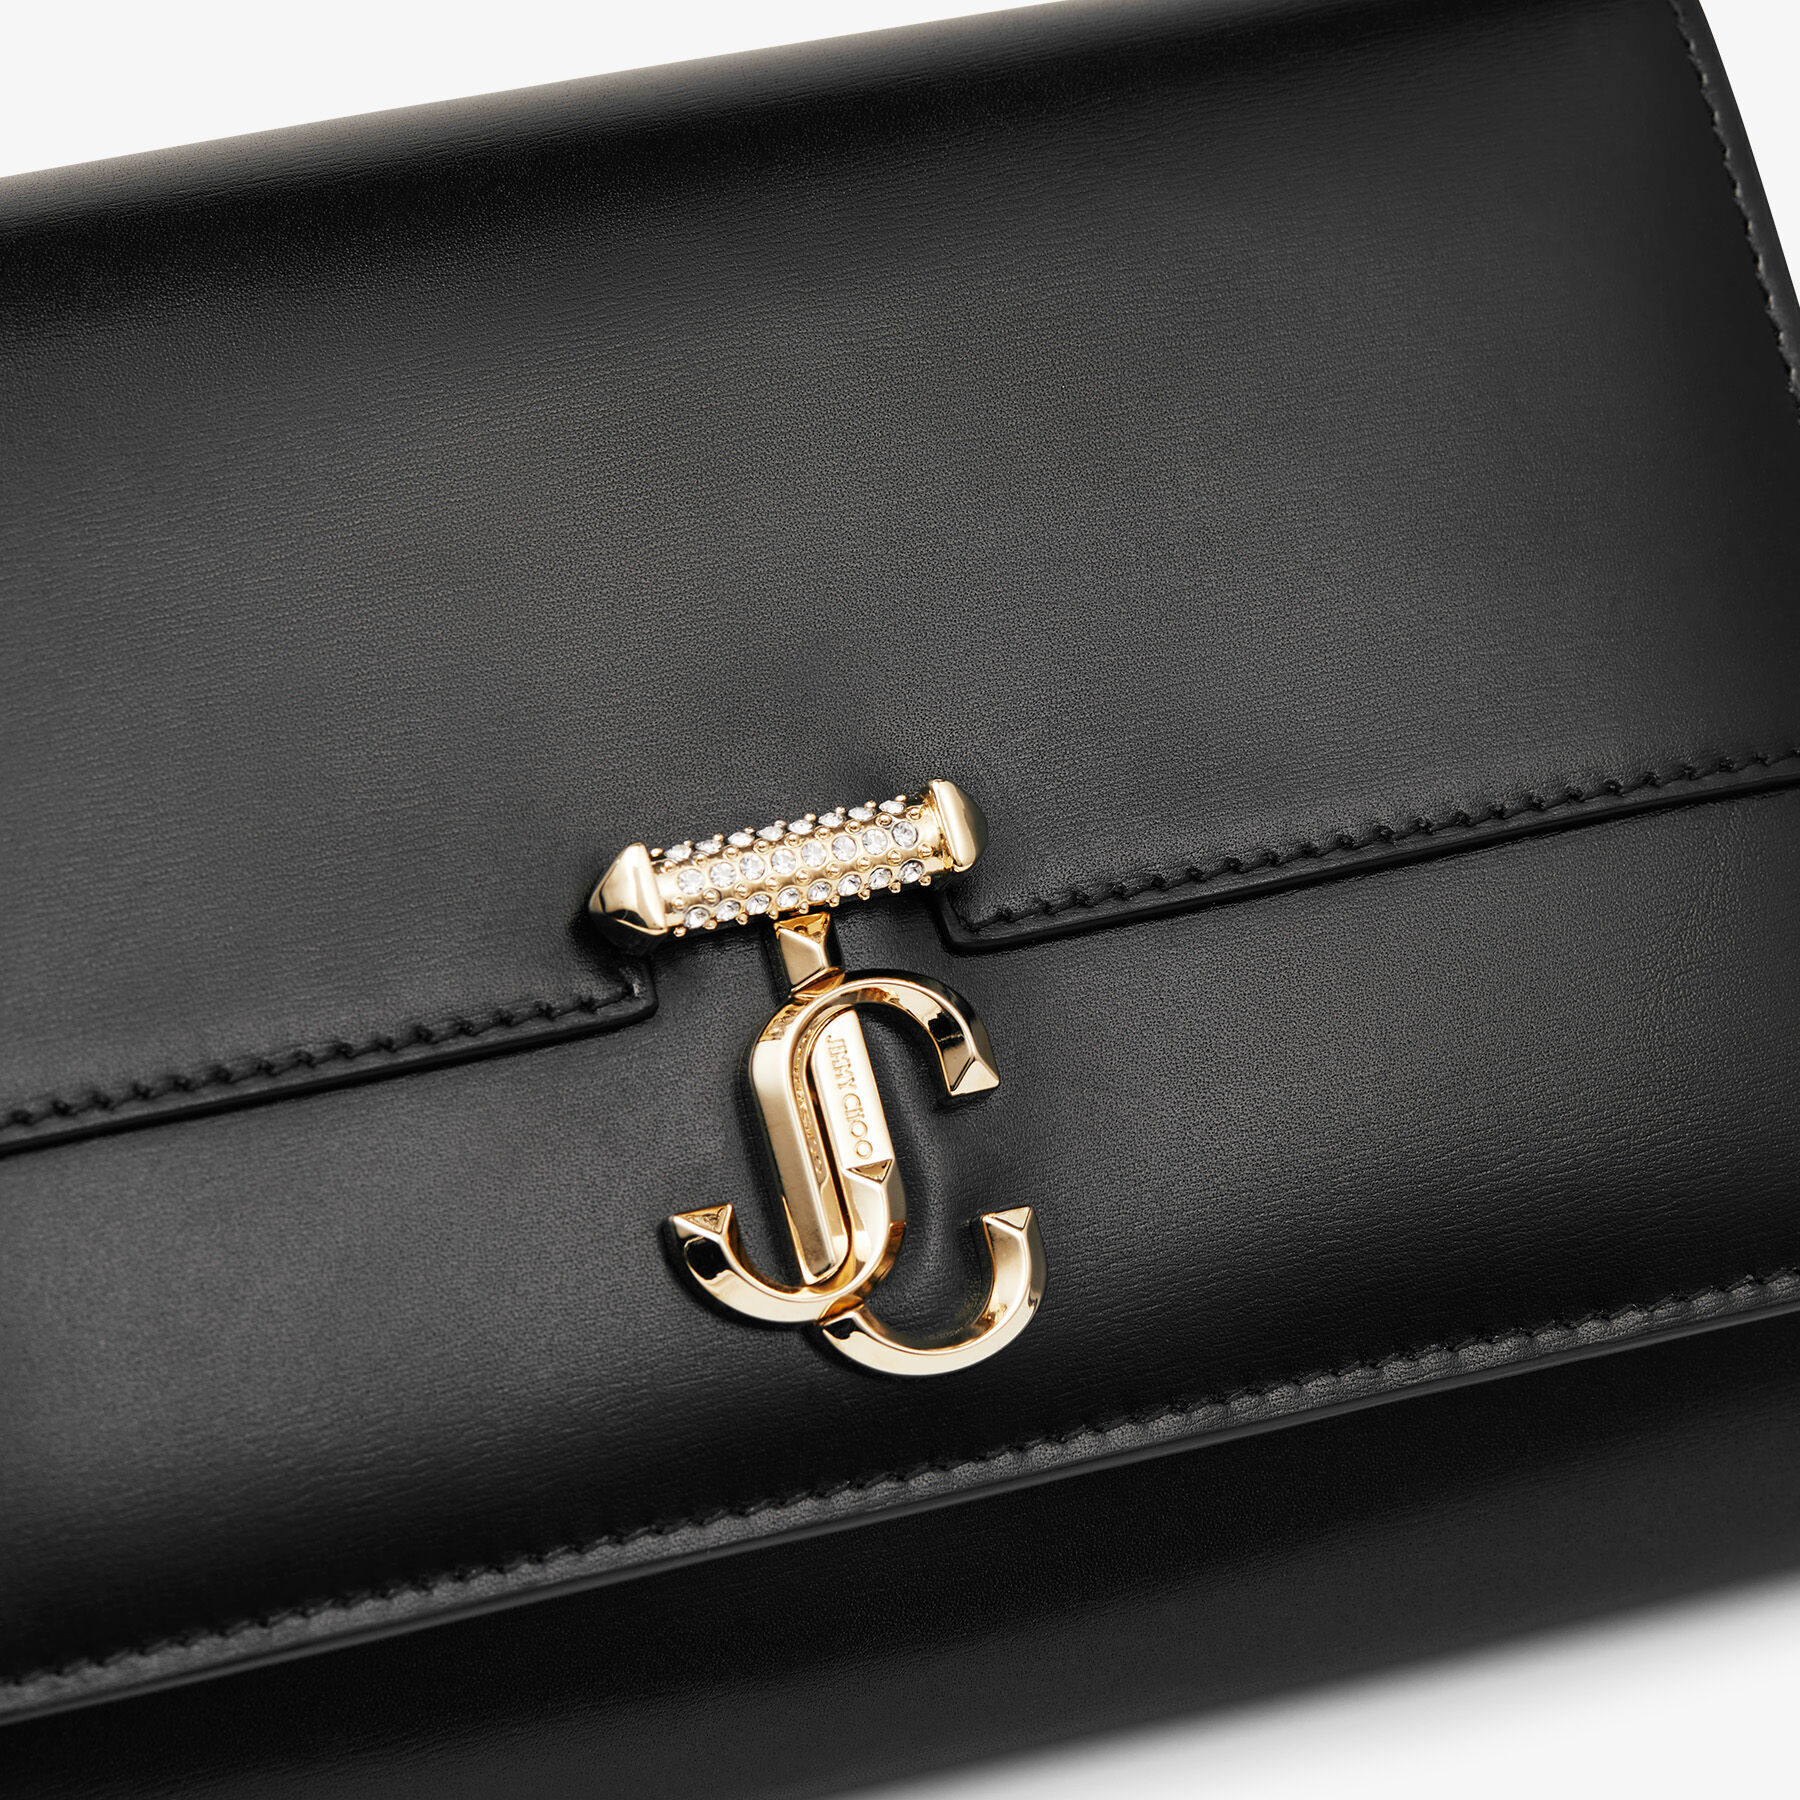 Black Box Leather Clutch Bag with Crystal-Embellished Light Gold